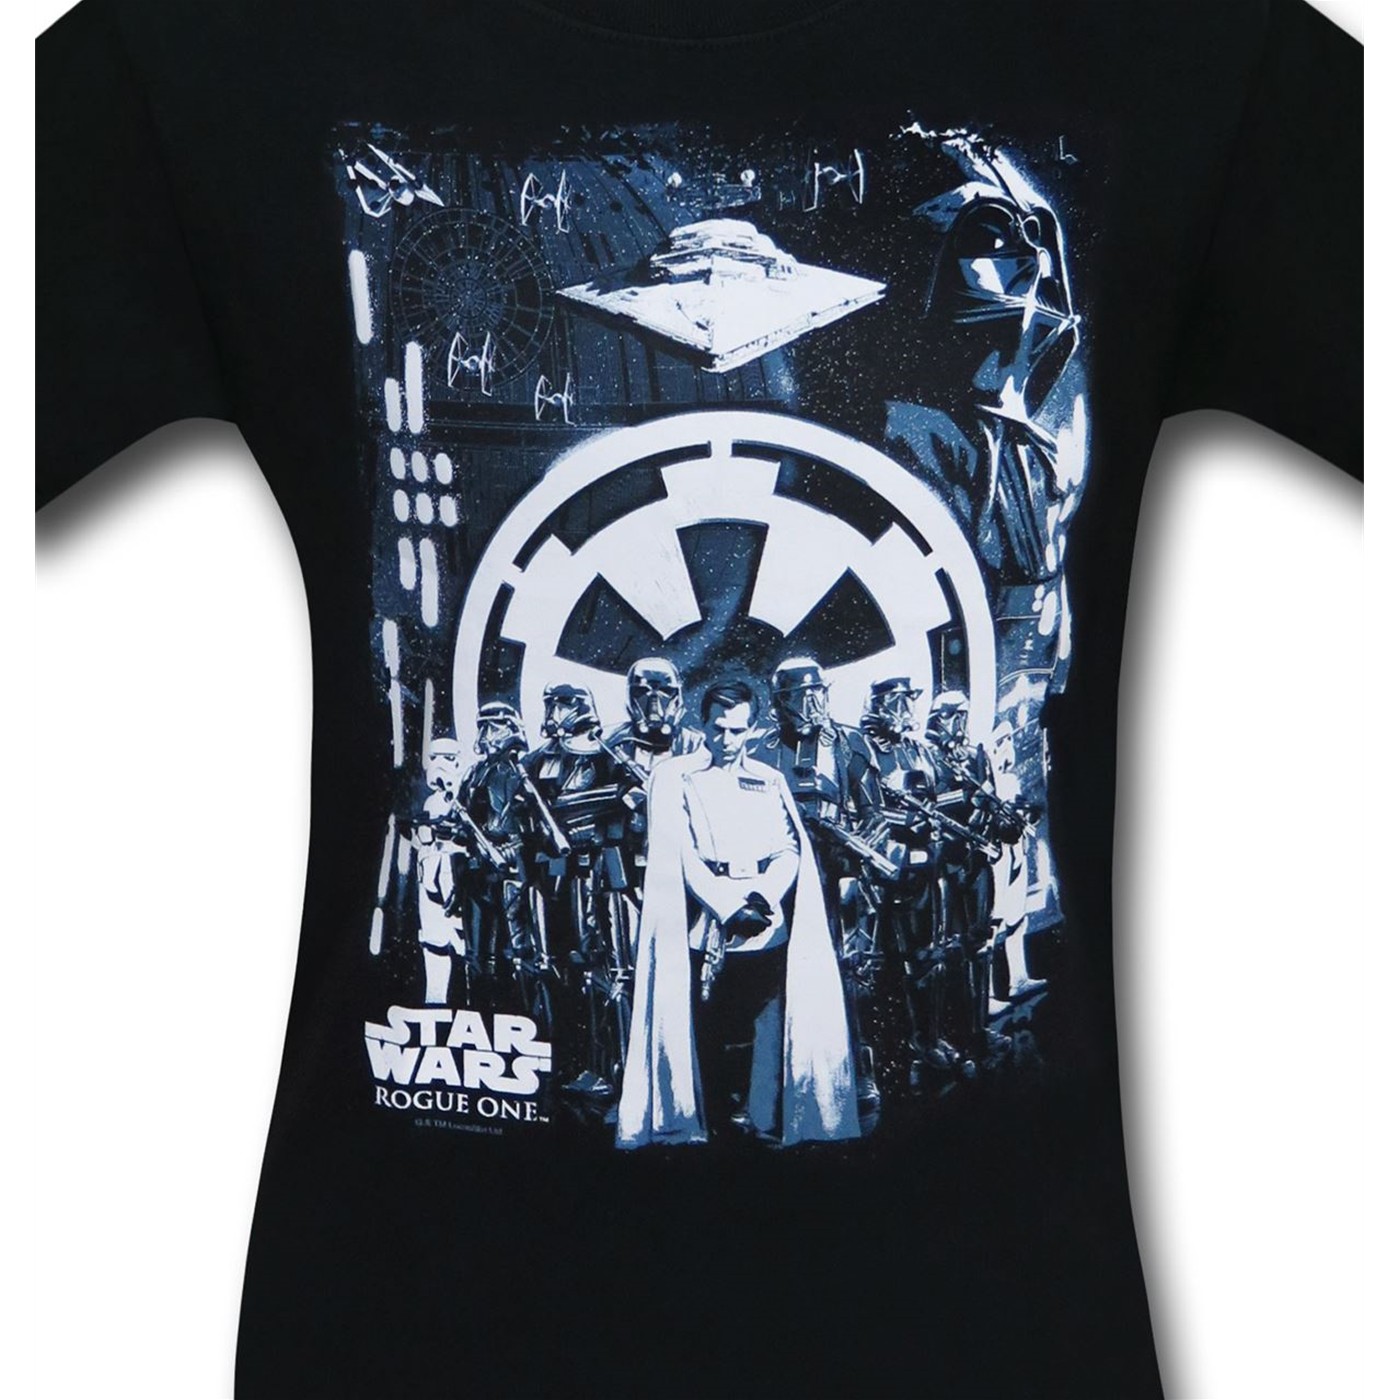 Star Wars Rogue One Looming Empire Men's T-Shirt